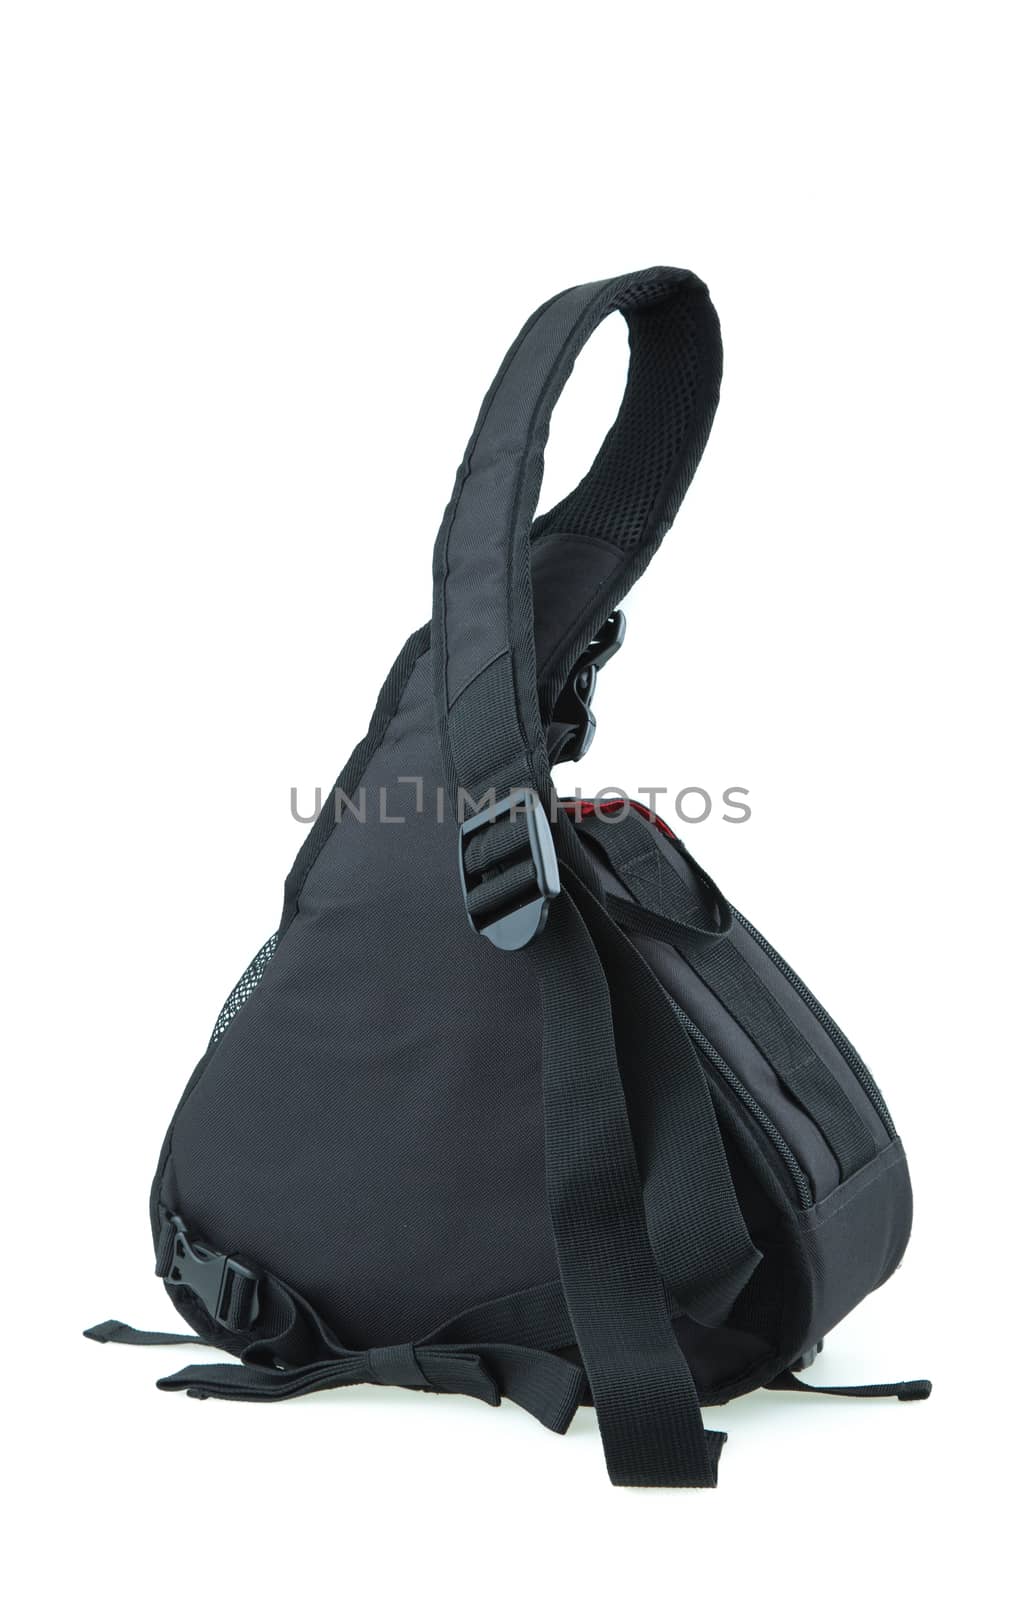 Black sling bag by tehcheesiong